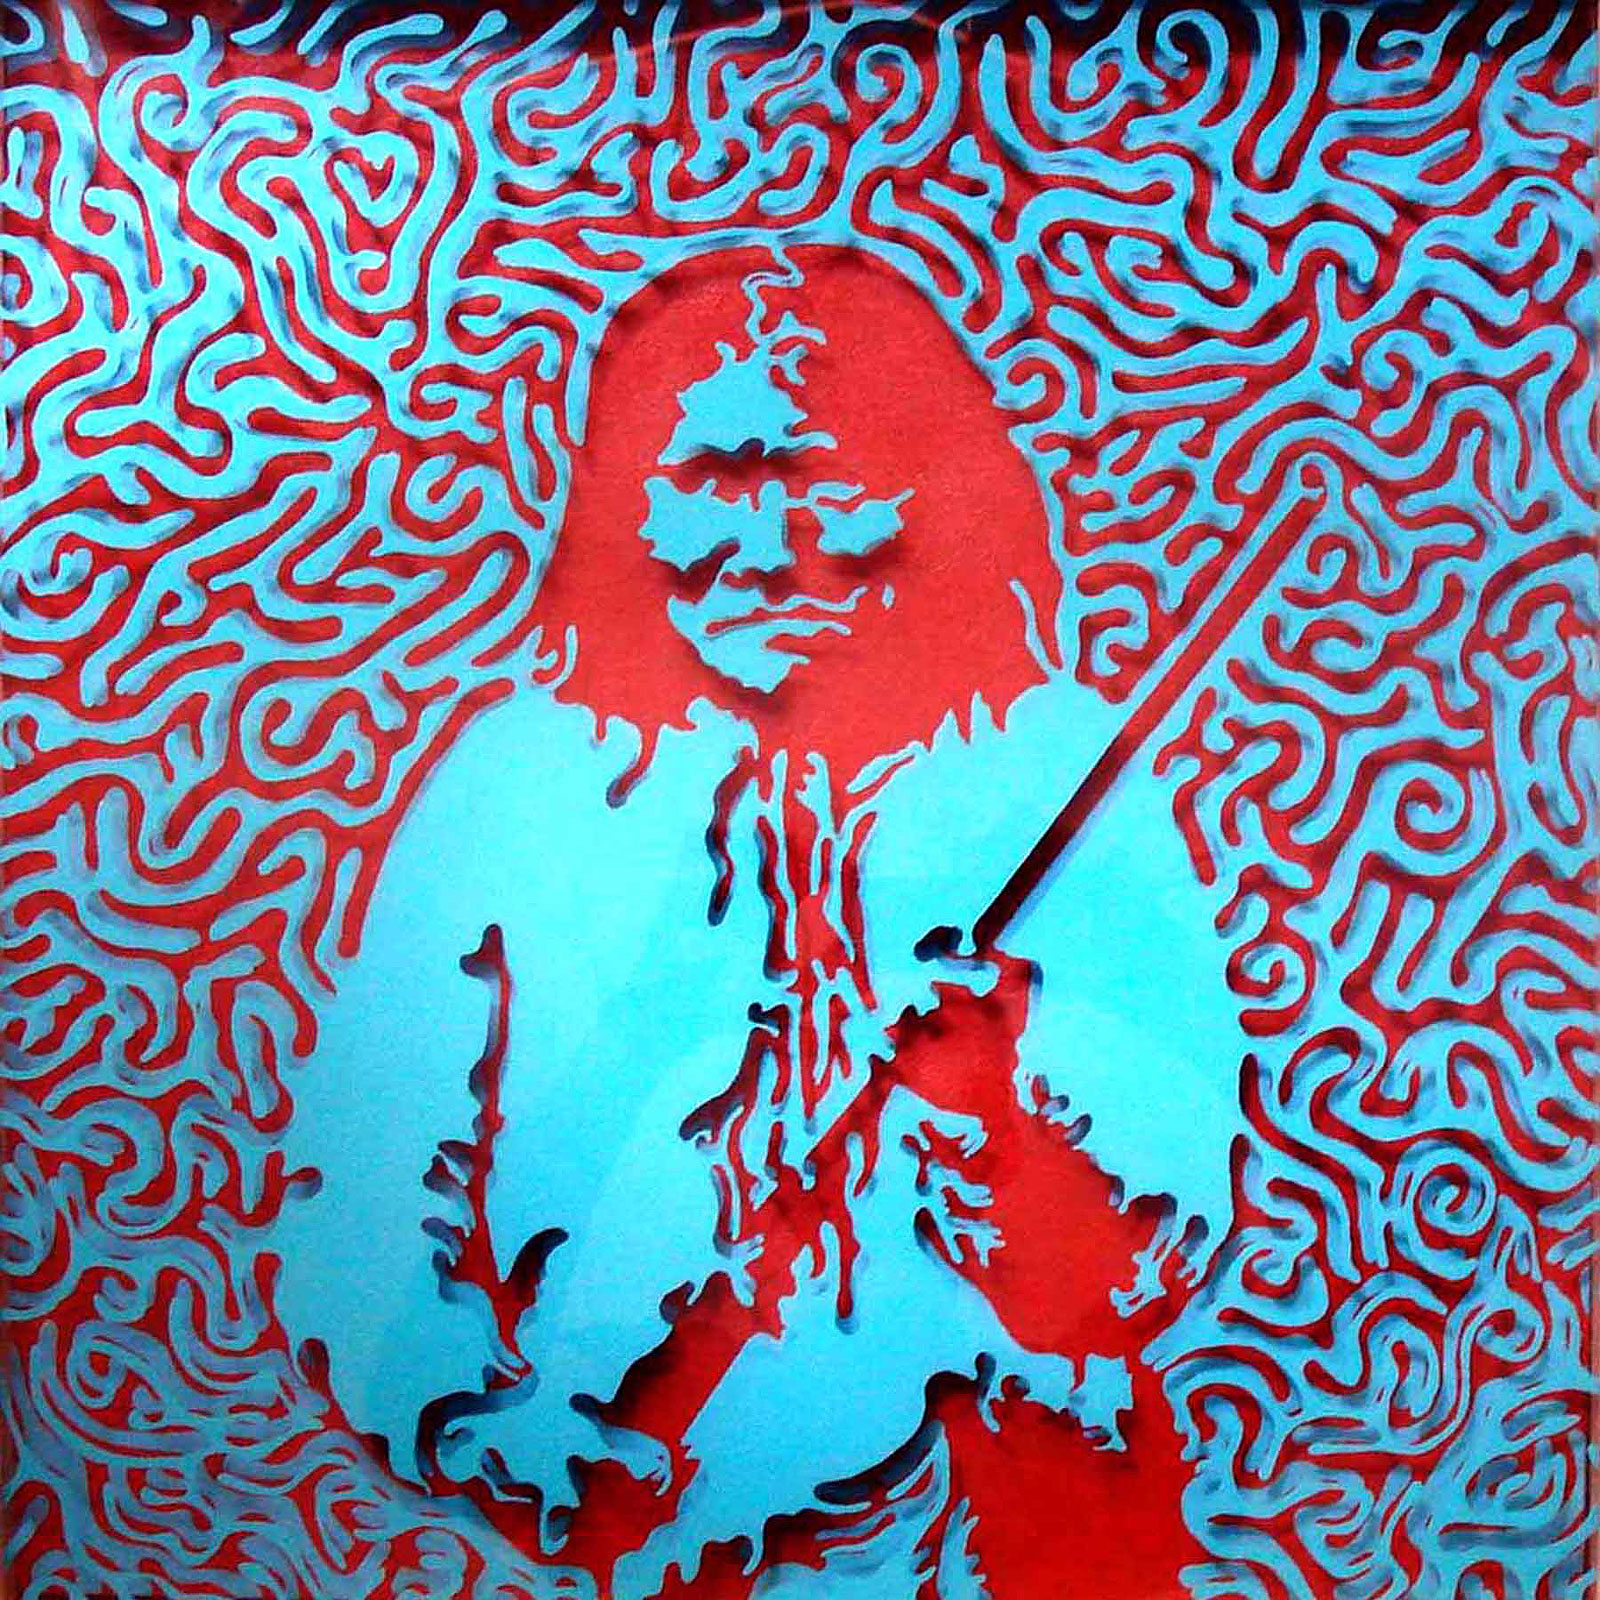  Geronimo  Acrylic on plexiglass and canvas  22" x 22" 